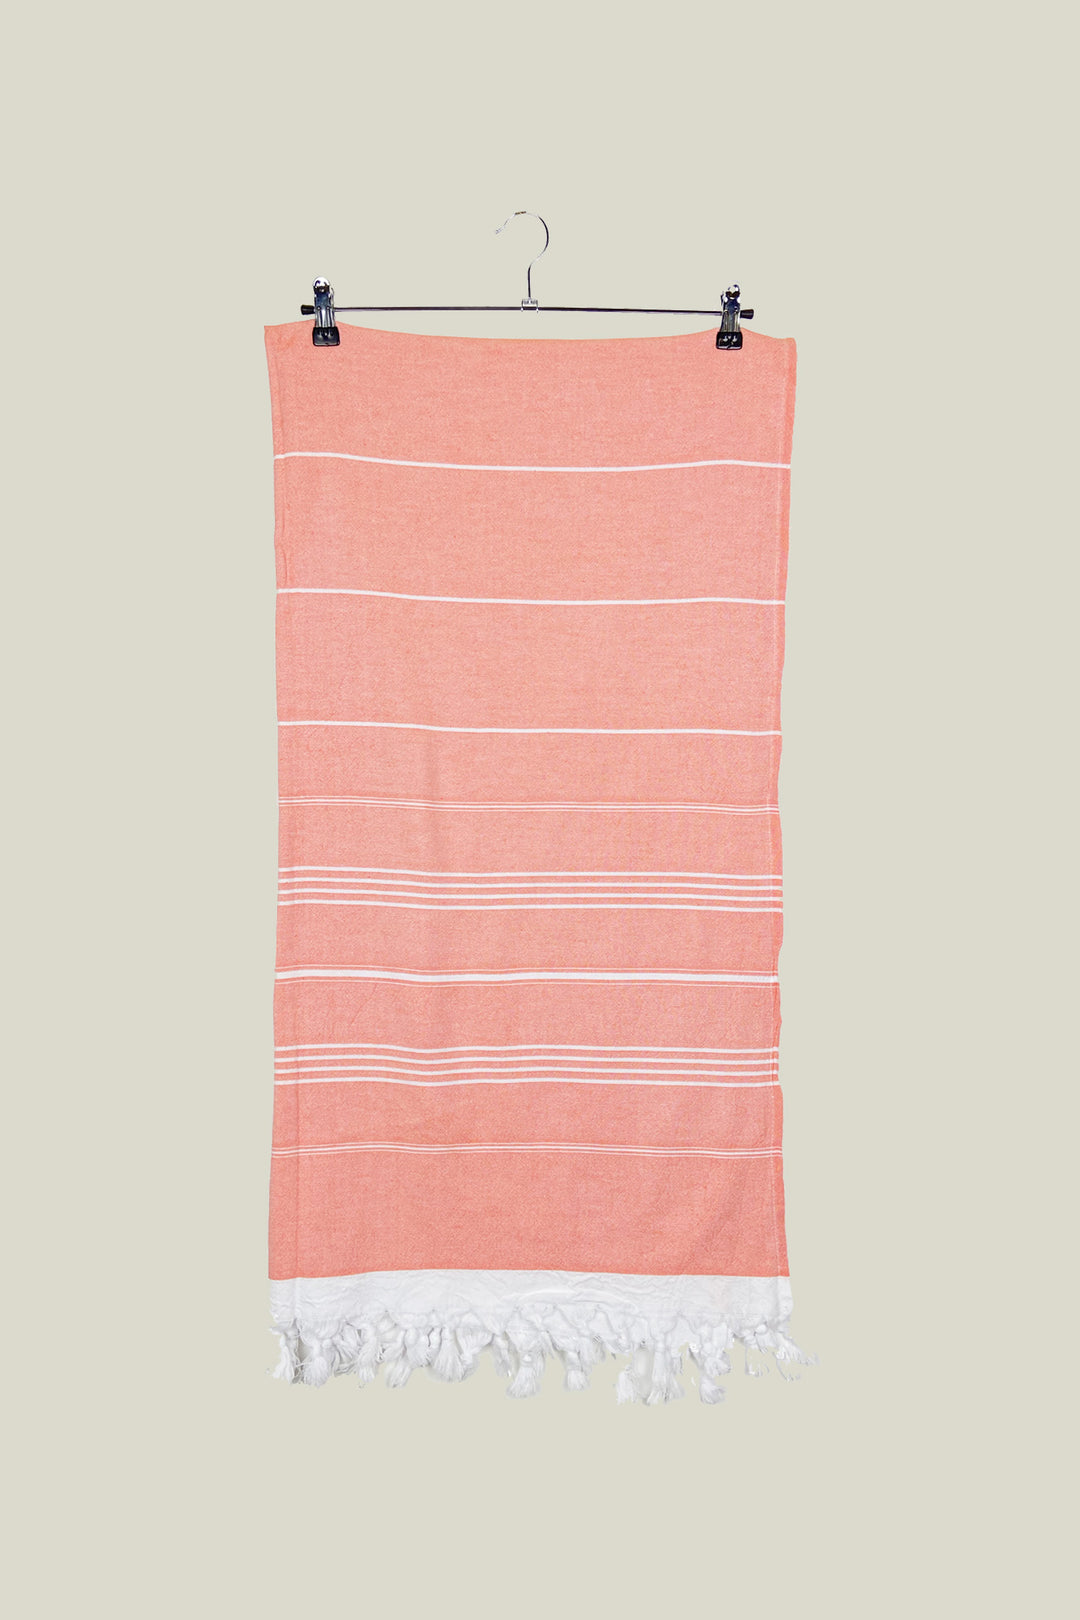 Towel "Fouta" - Salmon Pink